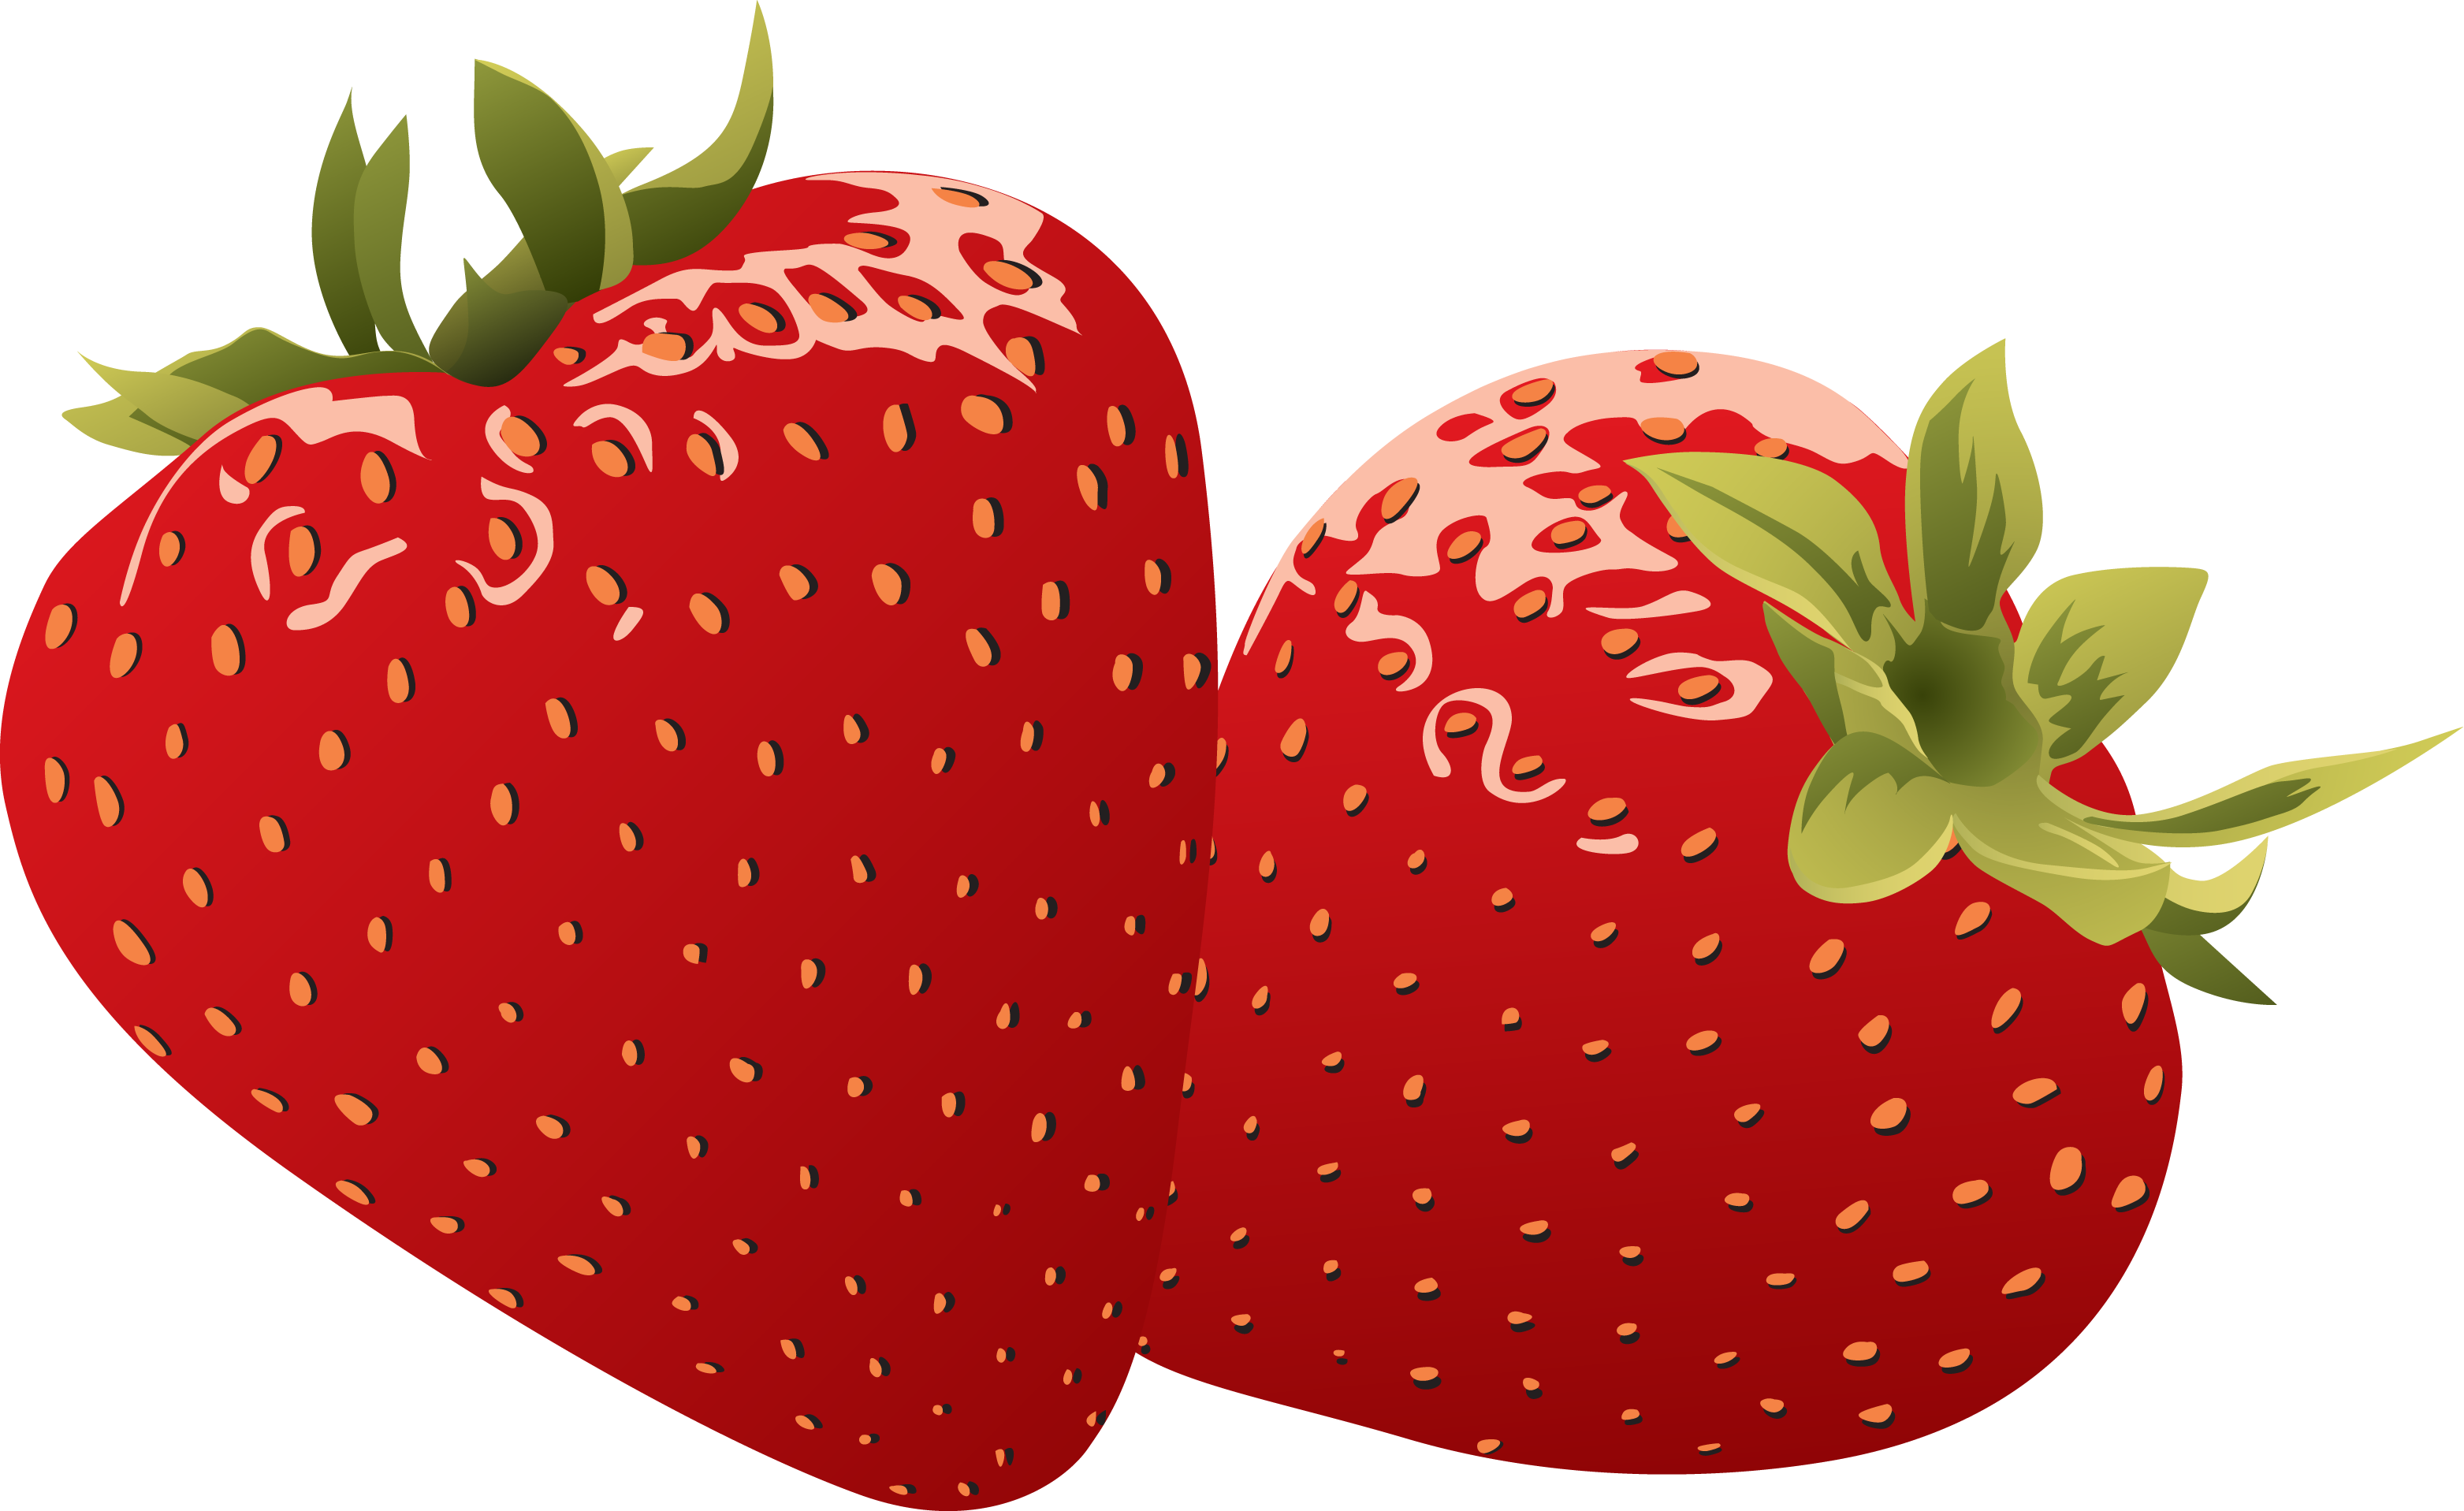 This cute cartoon strawberry 